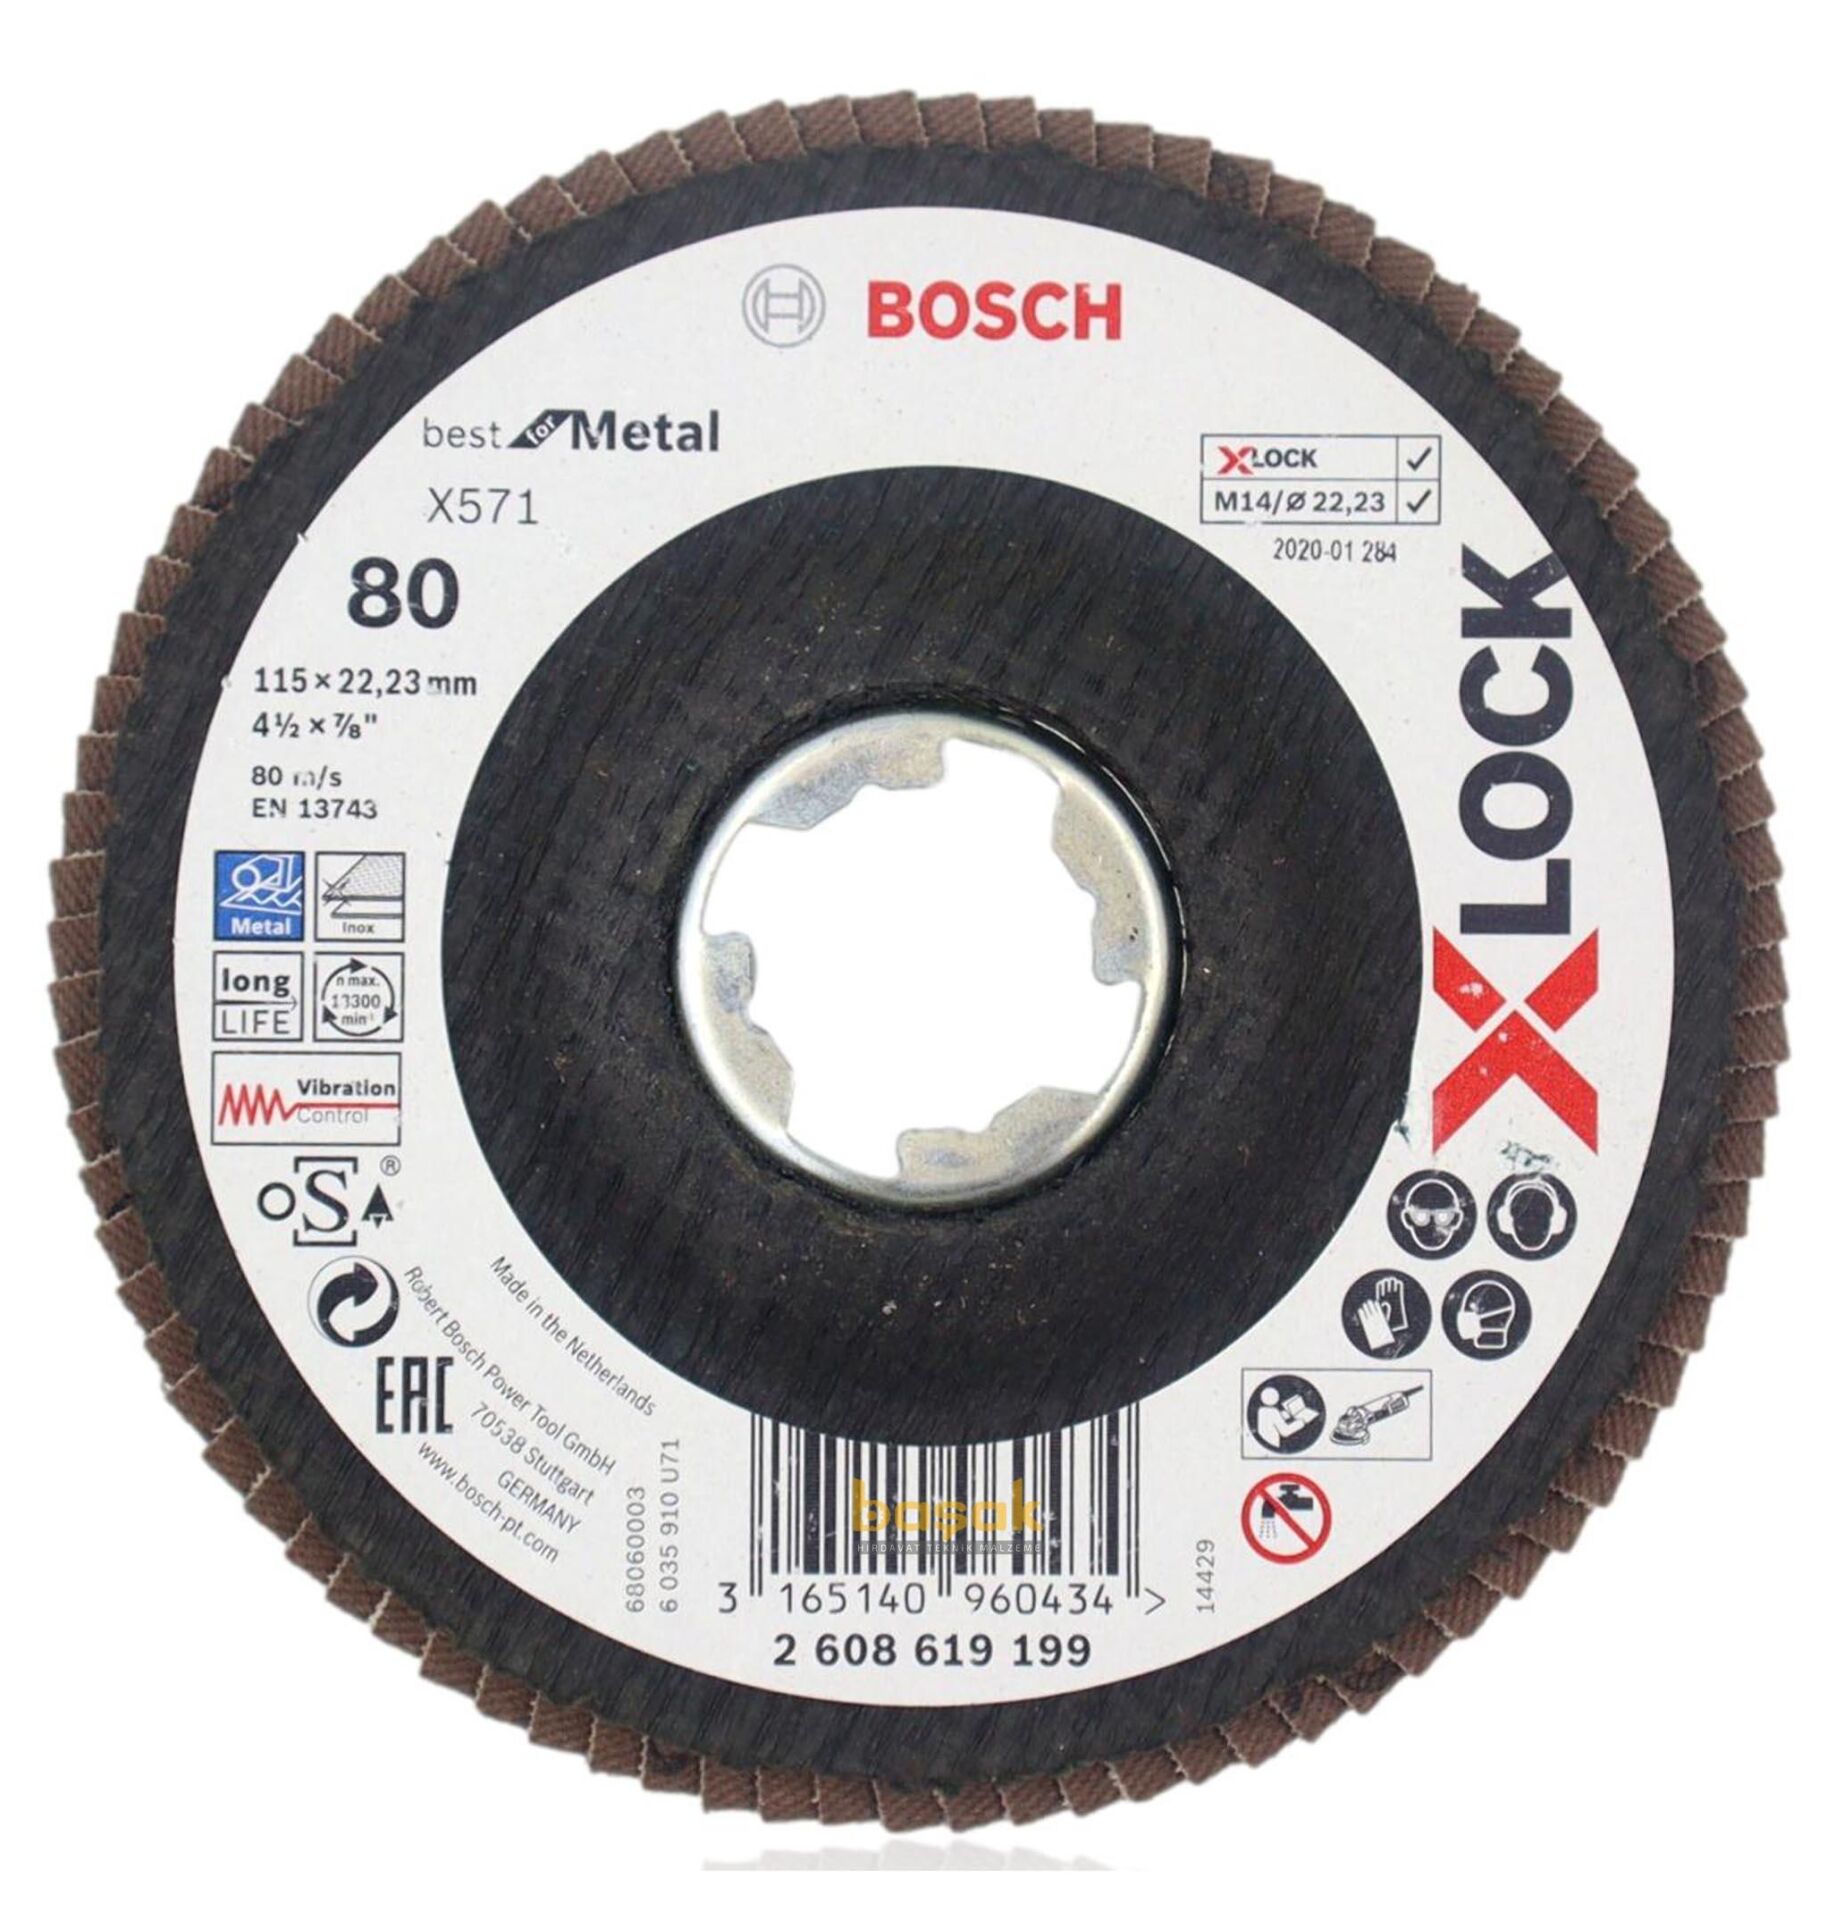 Bosch X-LOCK 115 mm 80 Kum Best Serisi Metal Flap Disk 2608619199